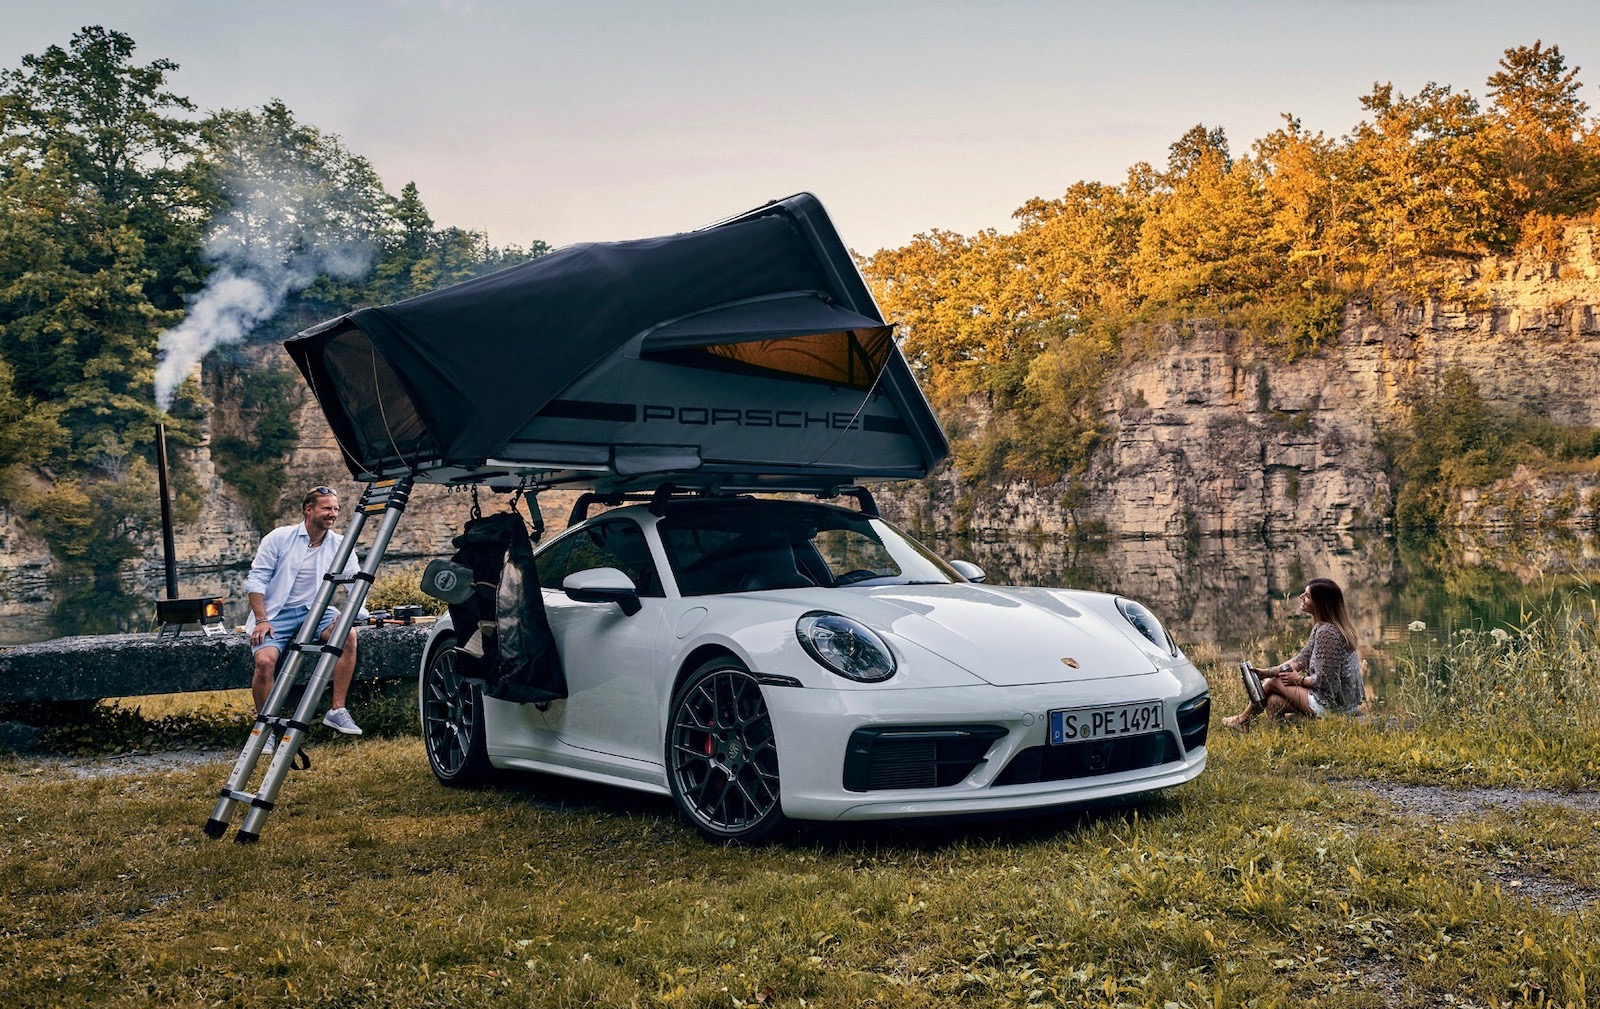 Porsche announces roof tent option for 911, available in Australia